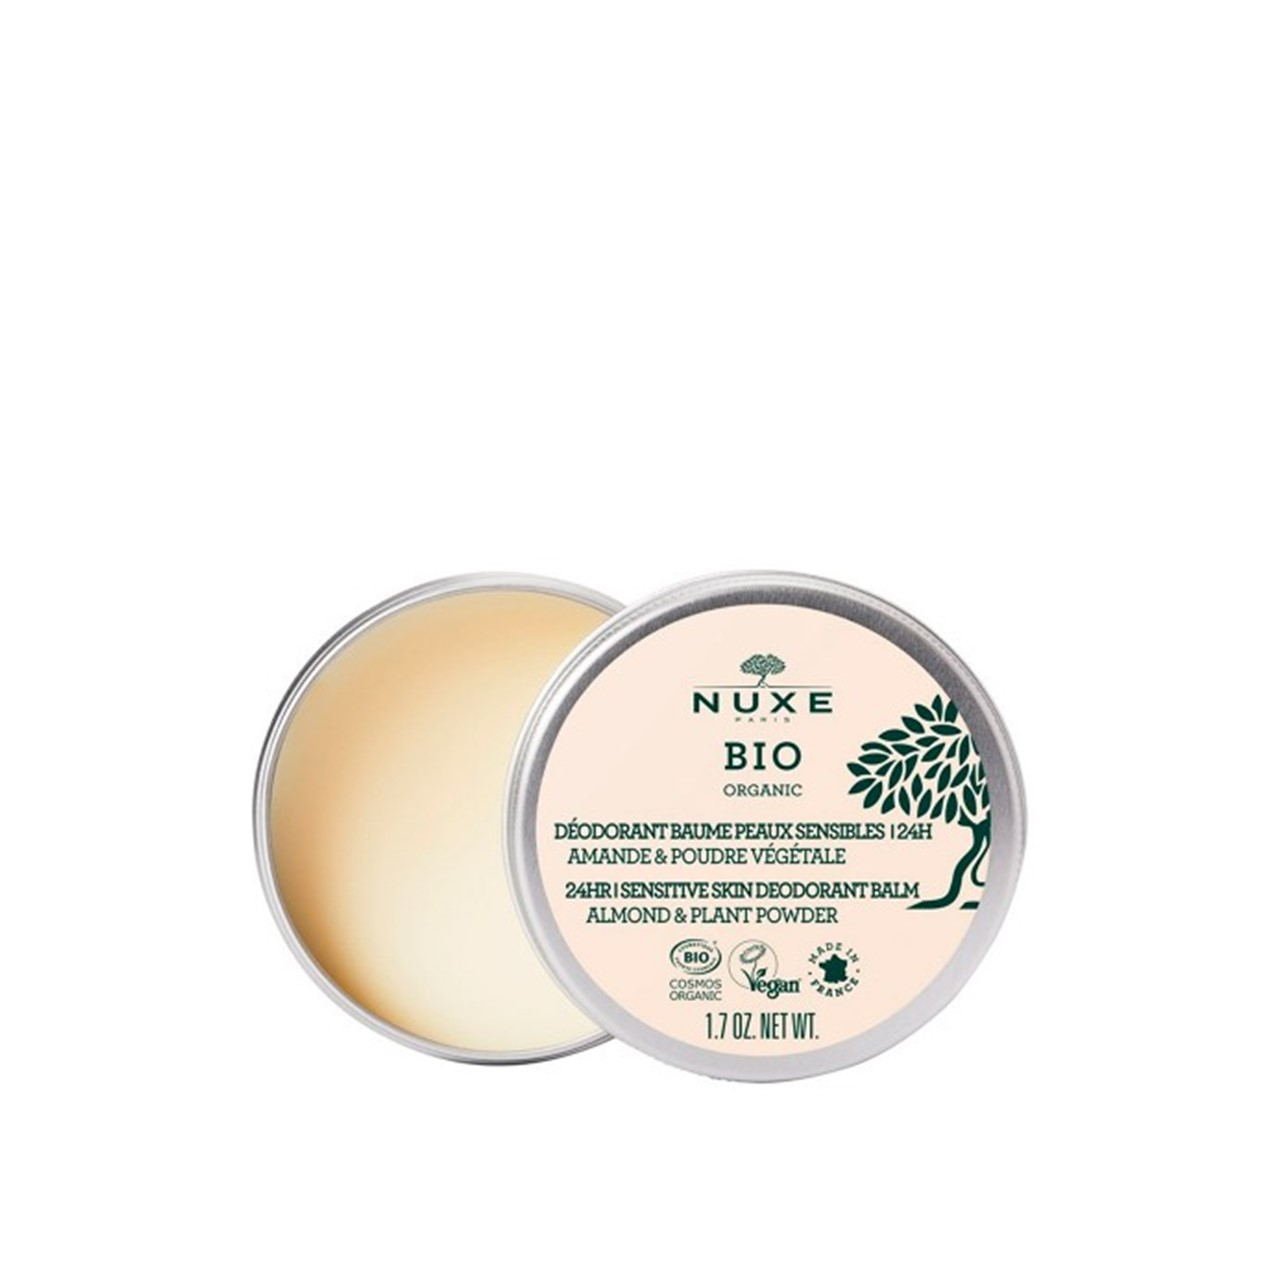 NUXE BIO Organic 24h Sensitive Skin Deodorant Balm 50g (1.76oz)